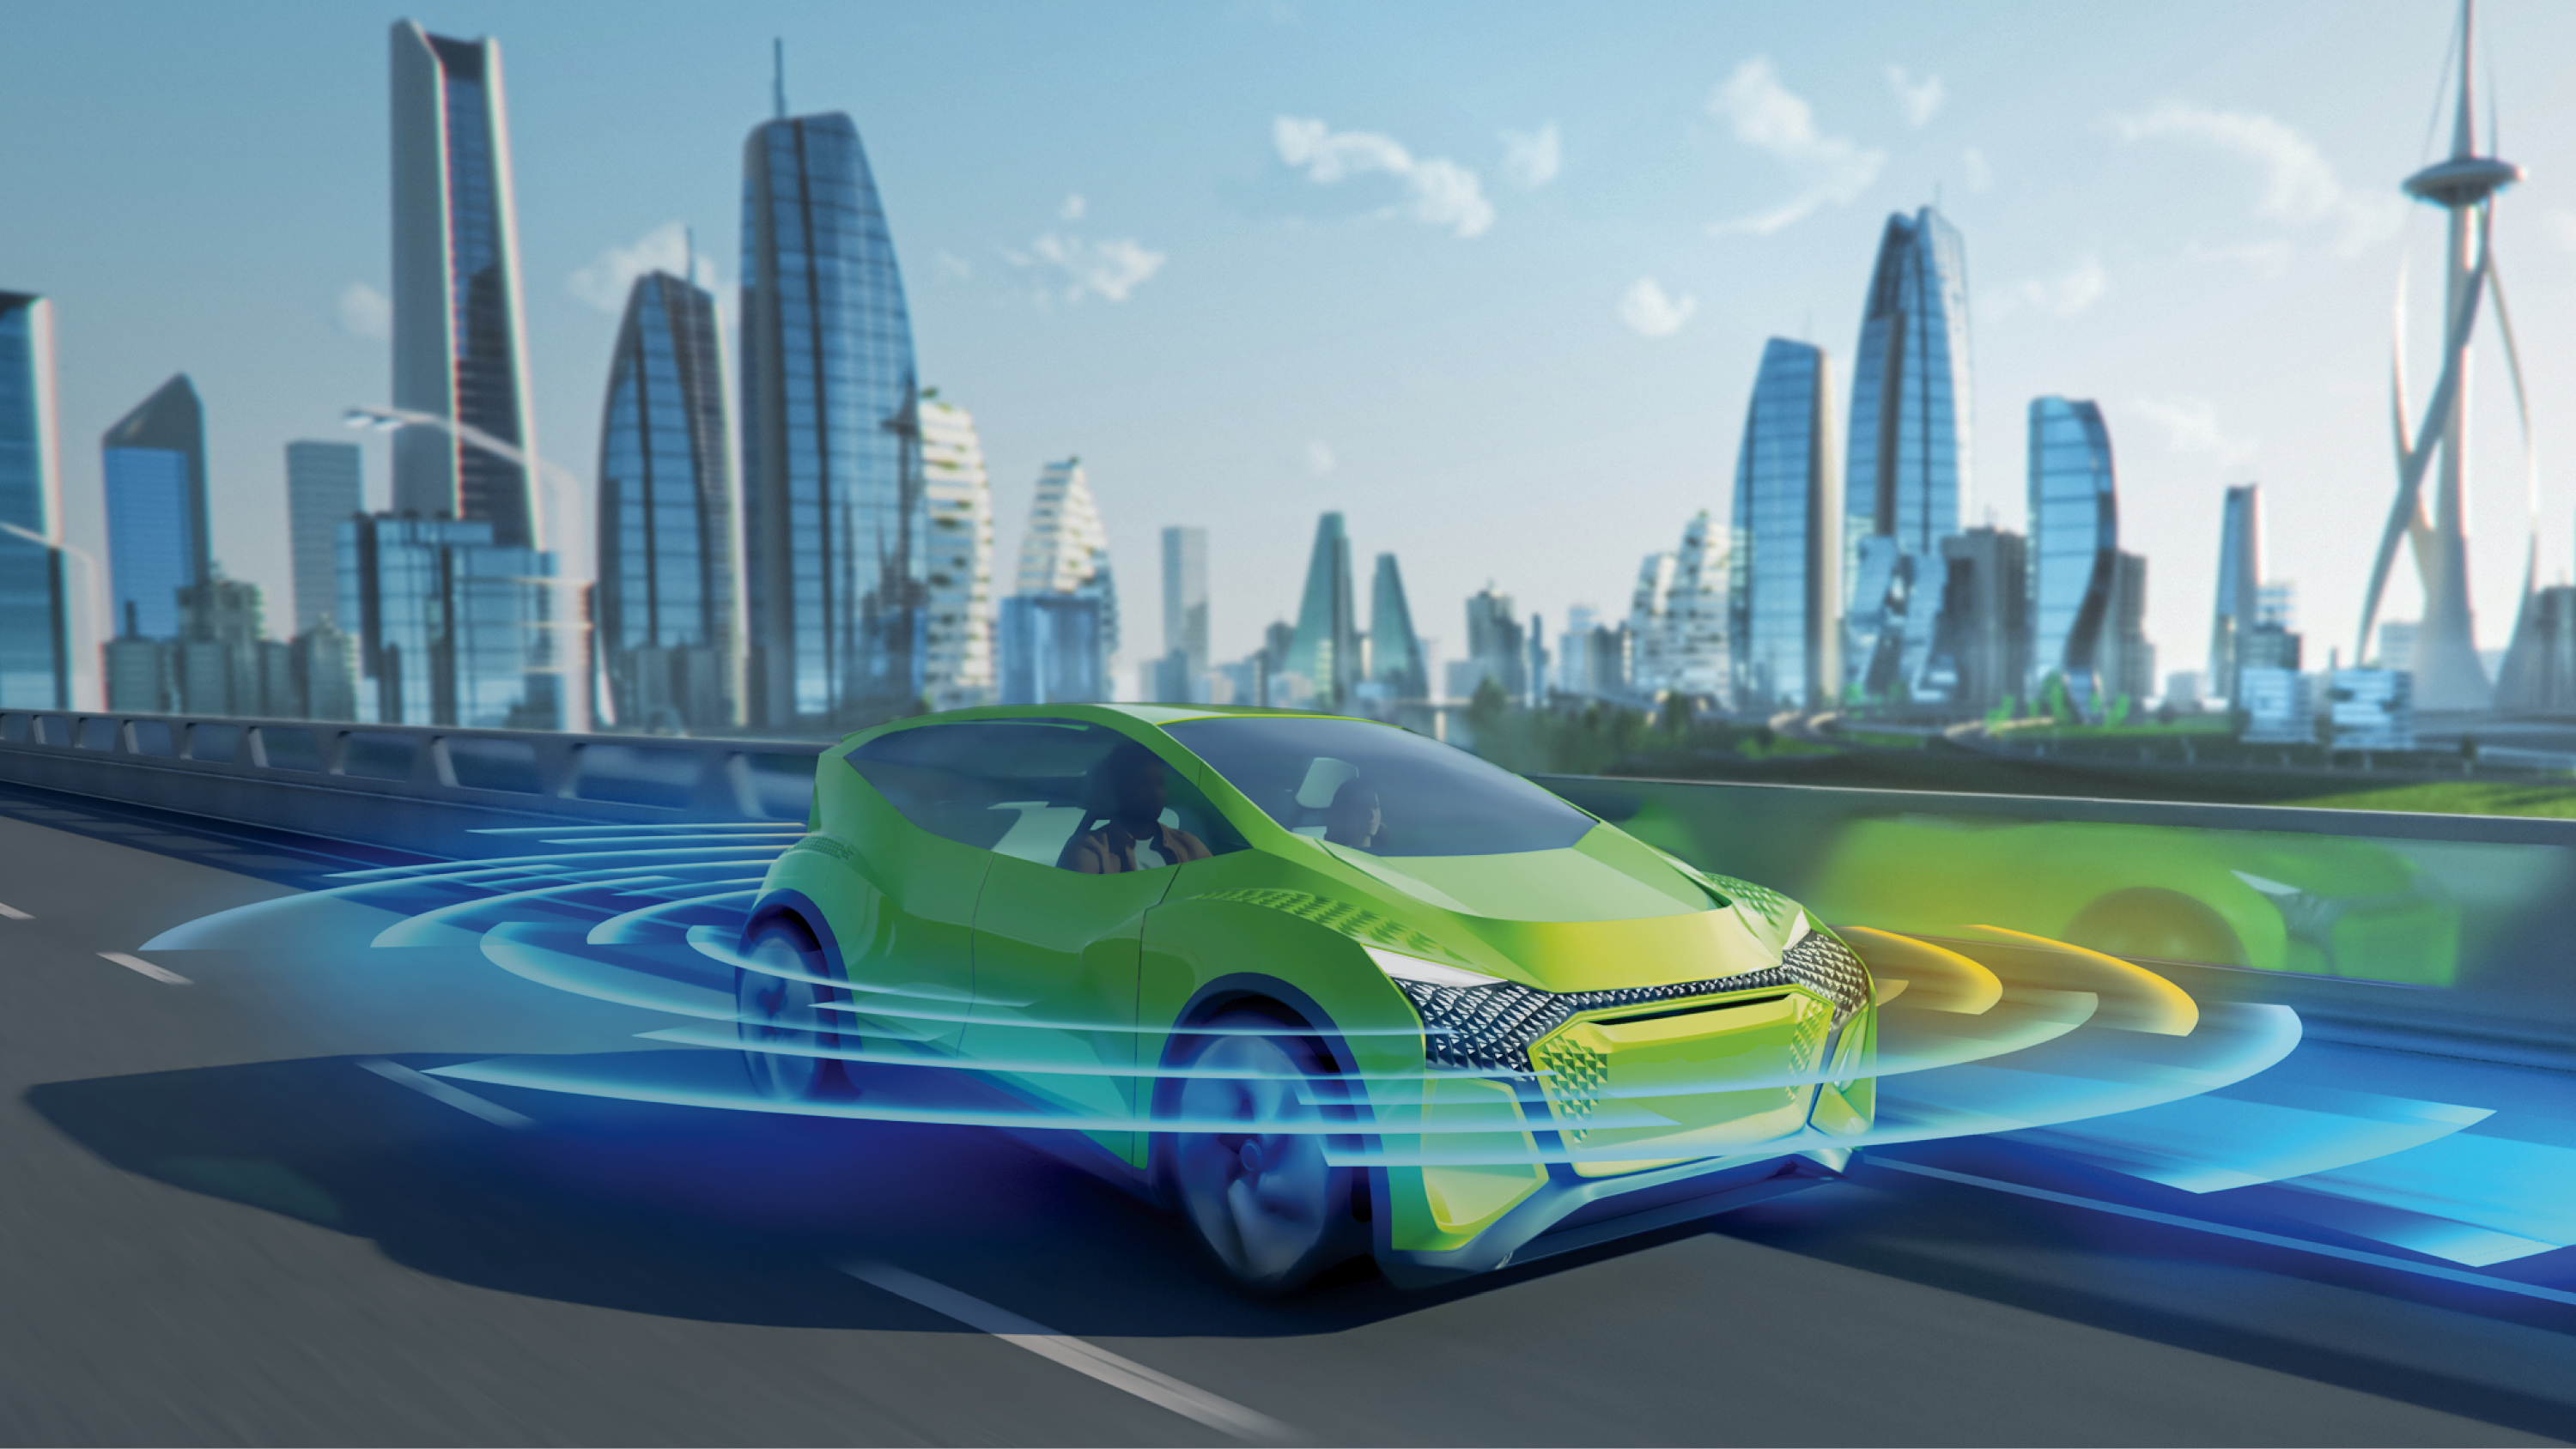 NXP Introduces Advanced Automotive Radar One-Chip Family for Next-Gen ADAS and Autonomous Driving Systems